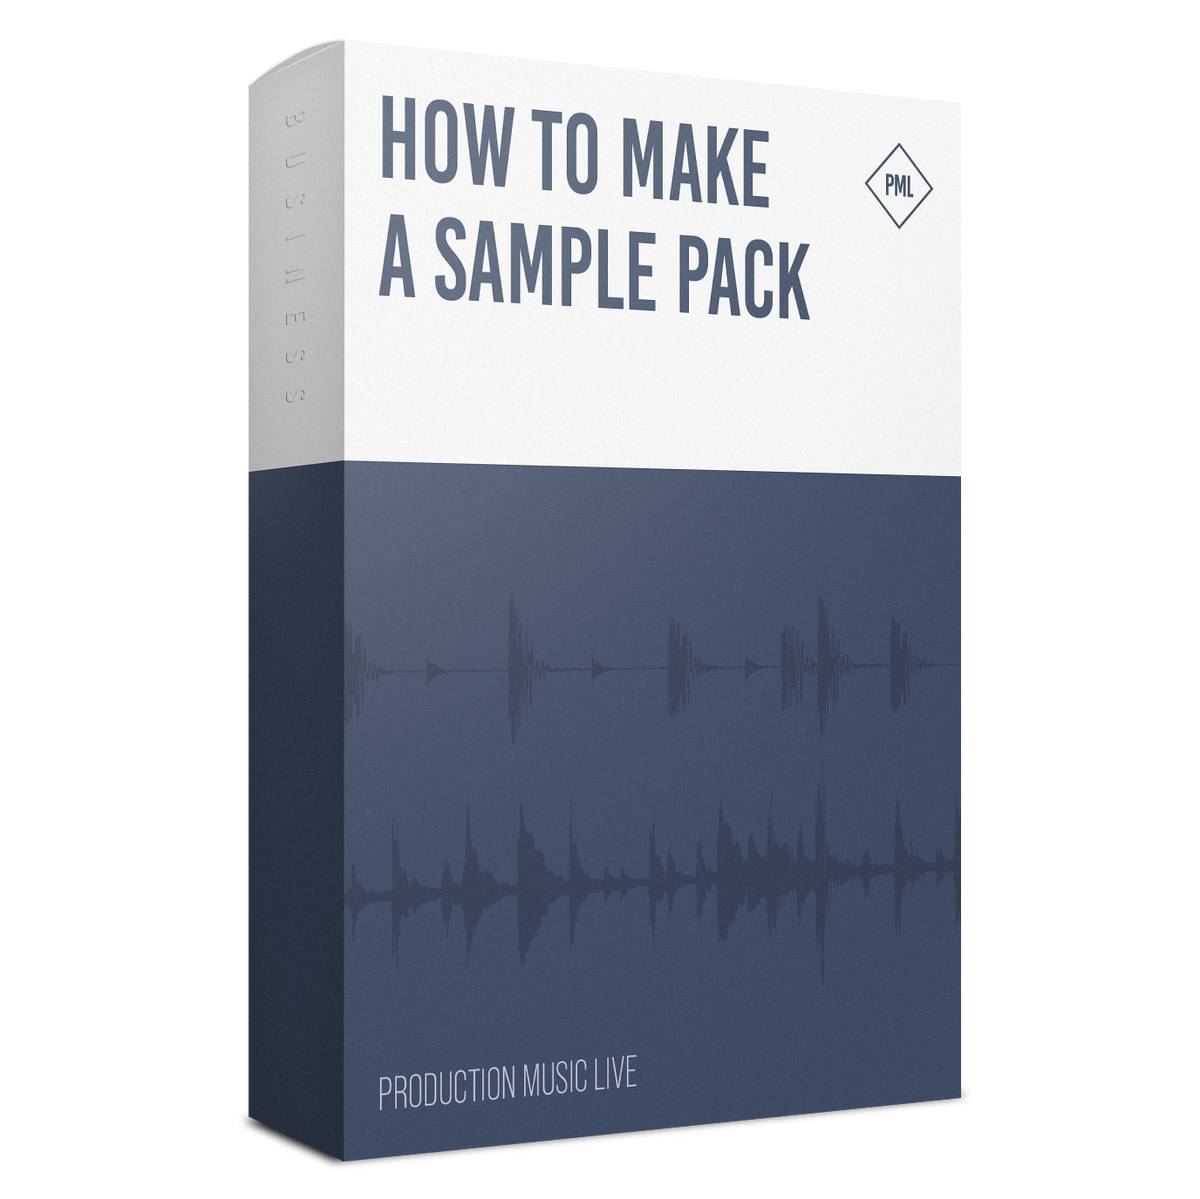 Sample packs for music production